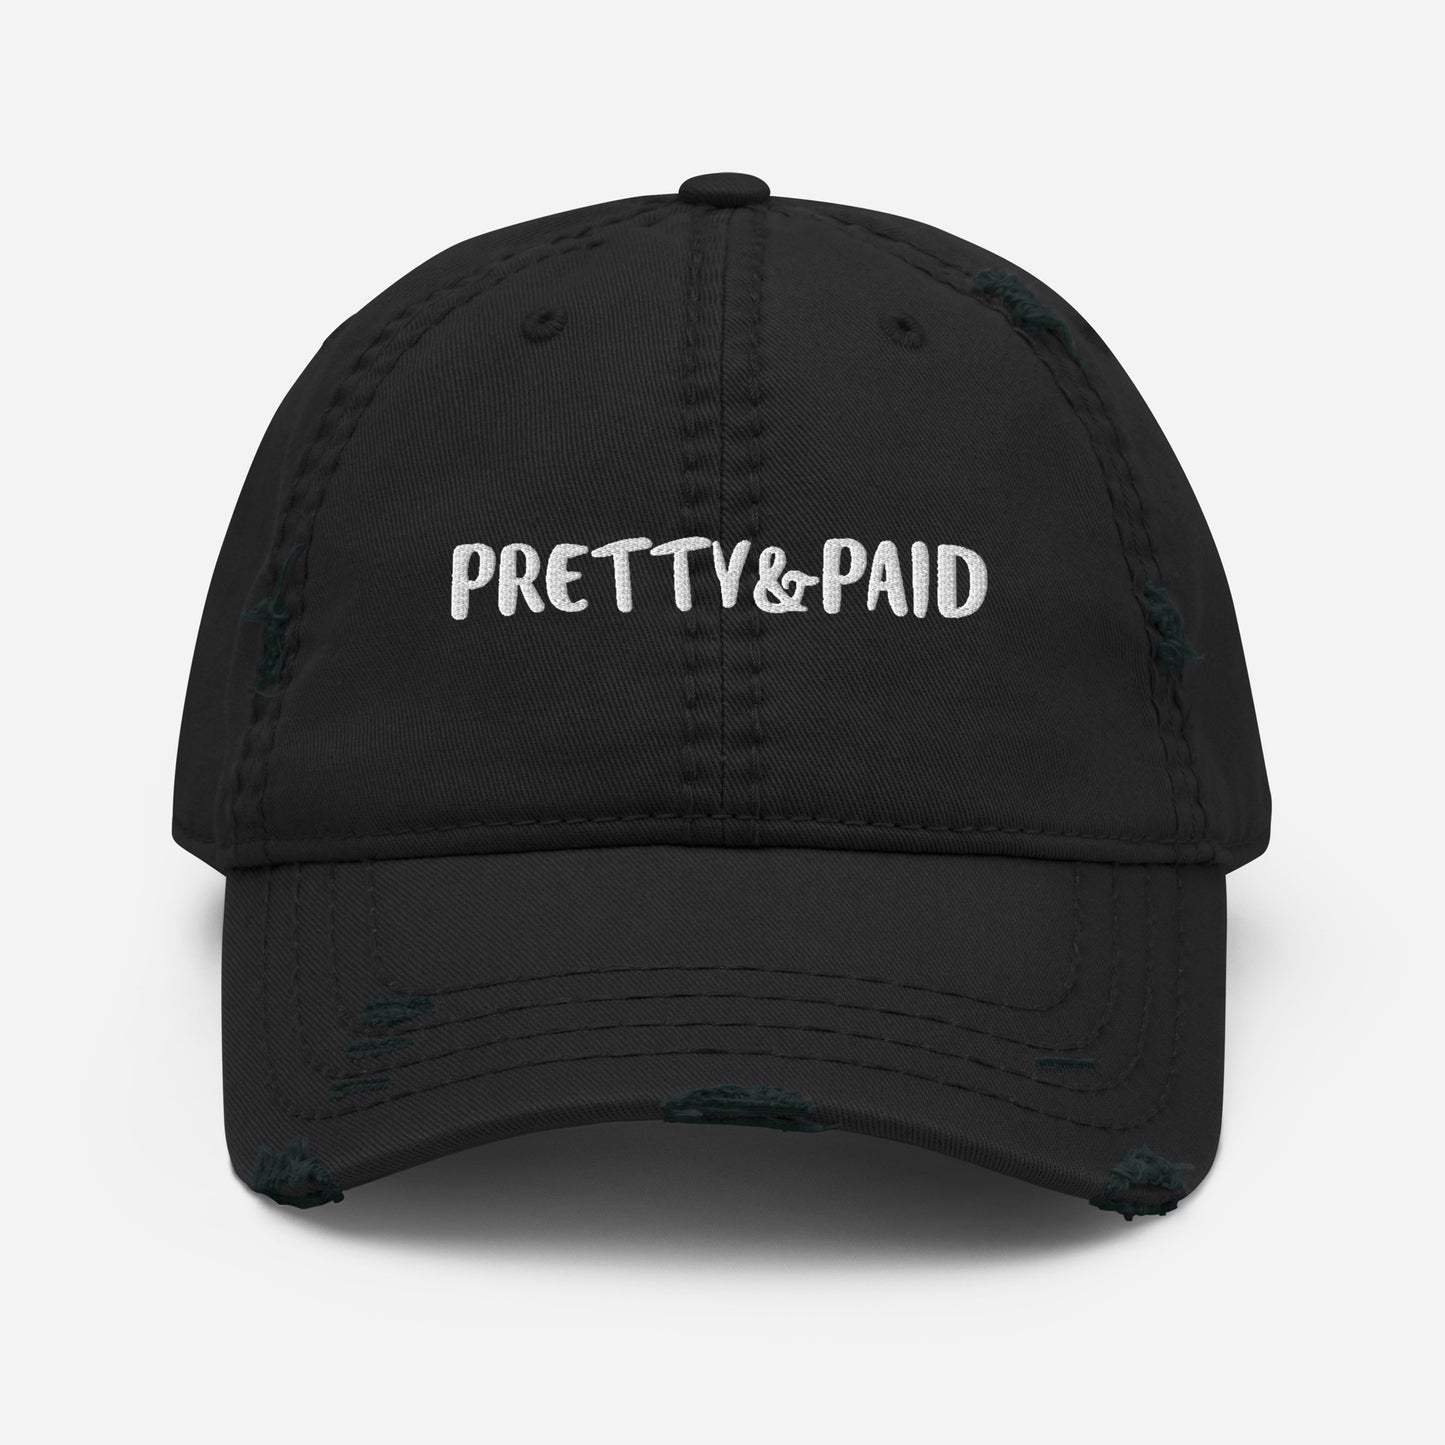 Pretty & Paid Distressed Dad Hat